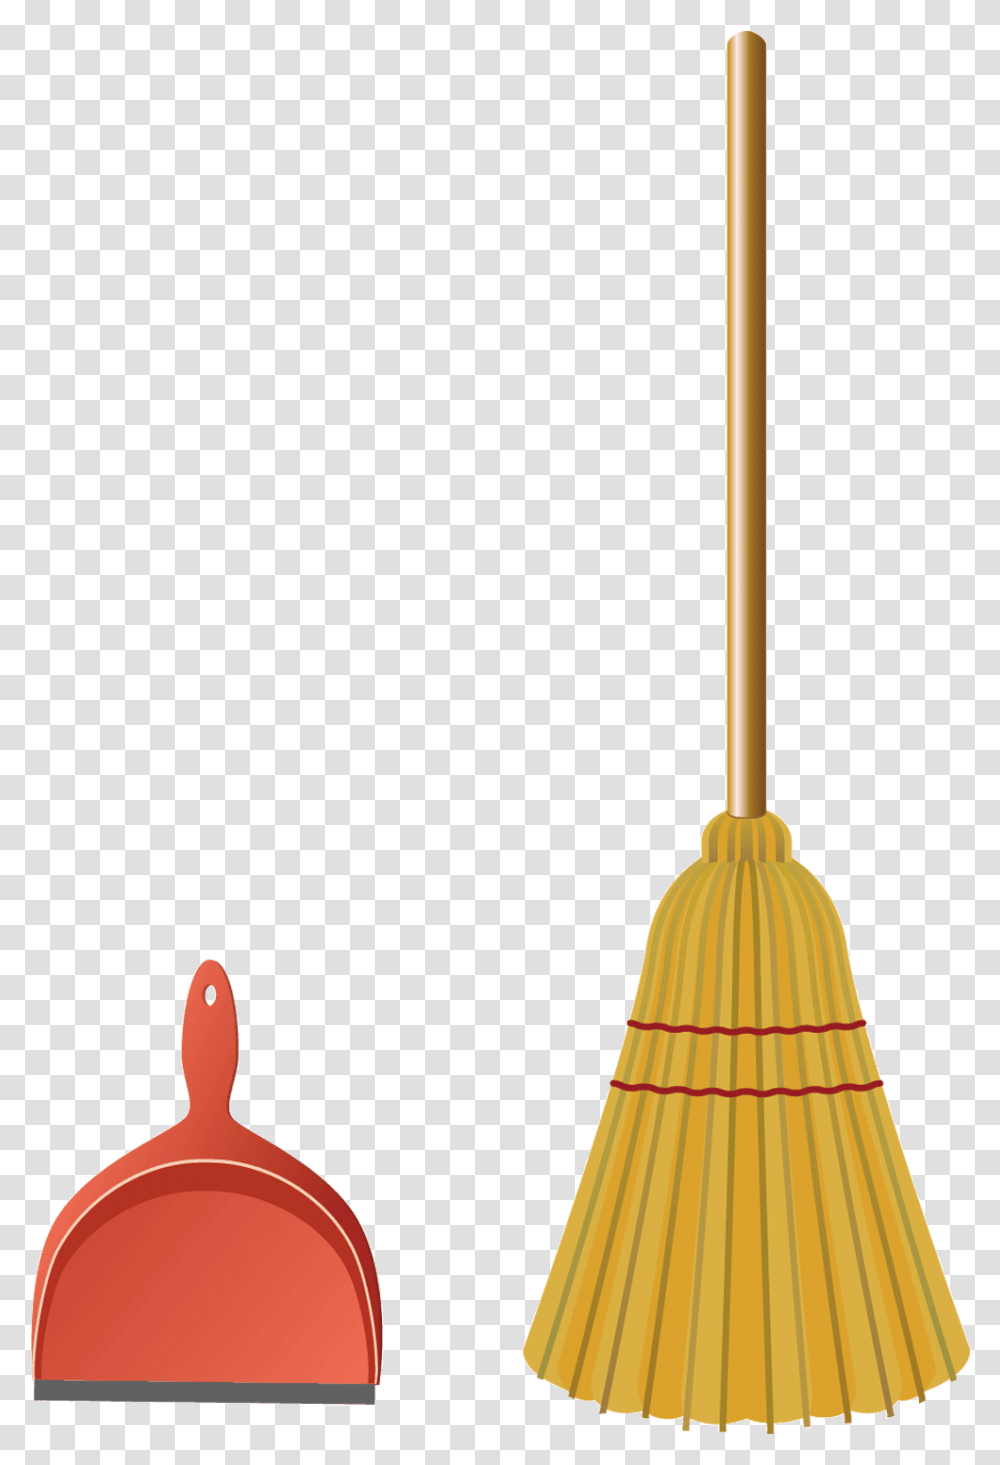 Broom Cleaning Illustration Cartoon Image Broom And Dustpan Cartoon, Lamp Transparent Png